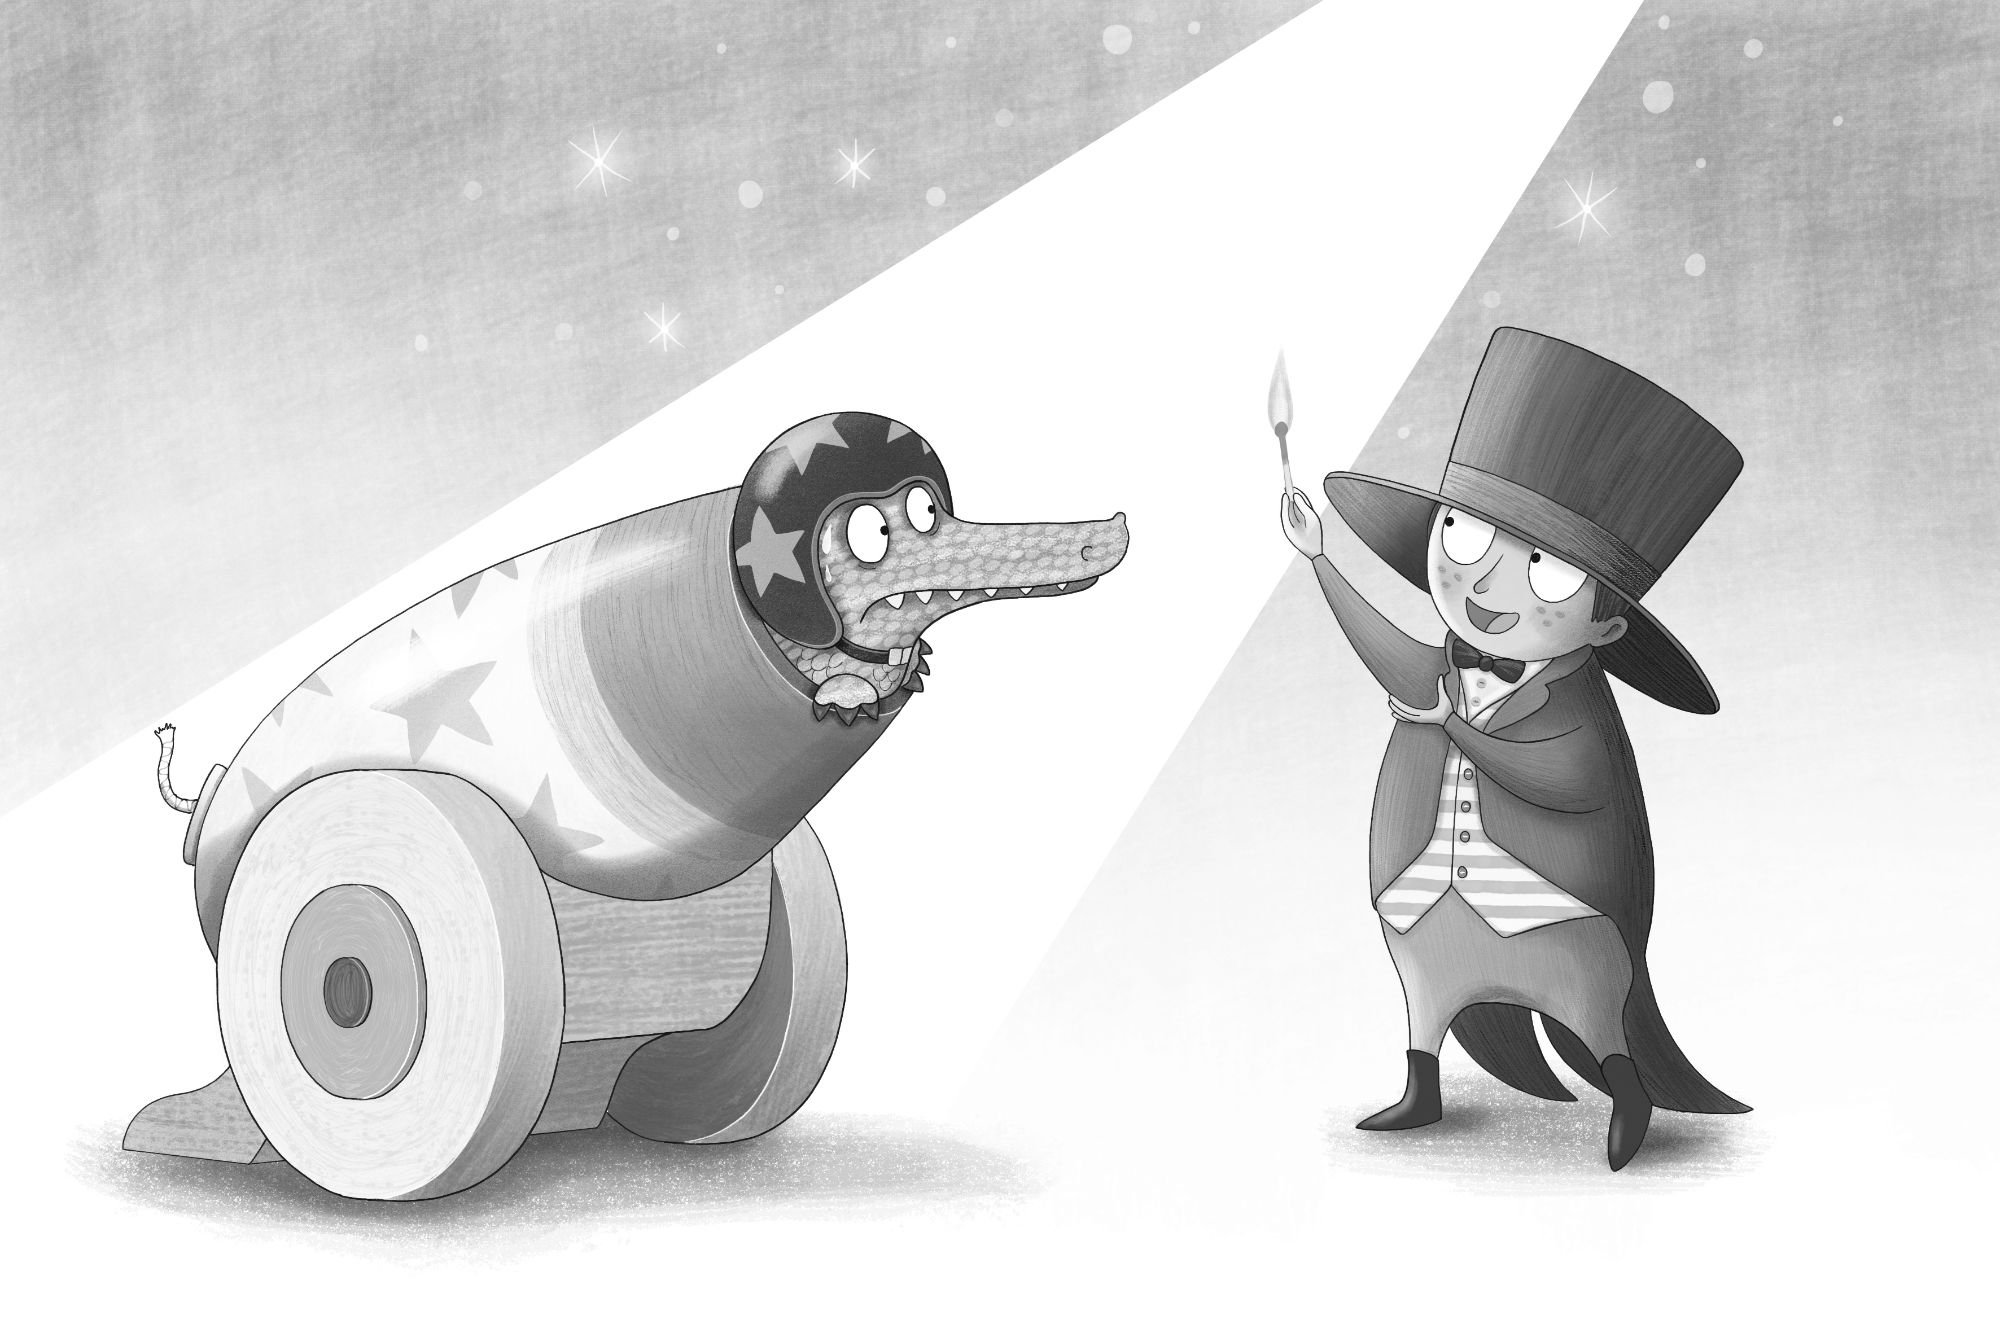 Circus cannon illustration